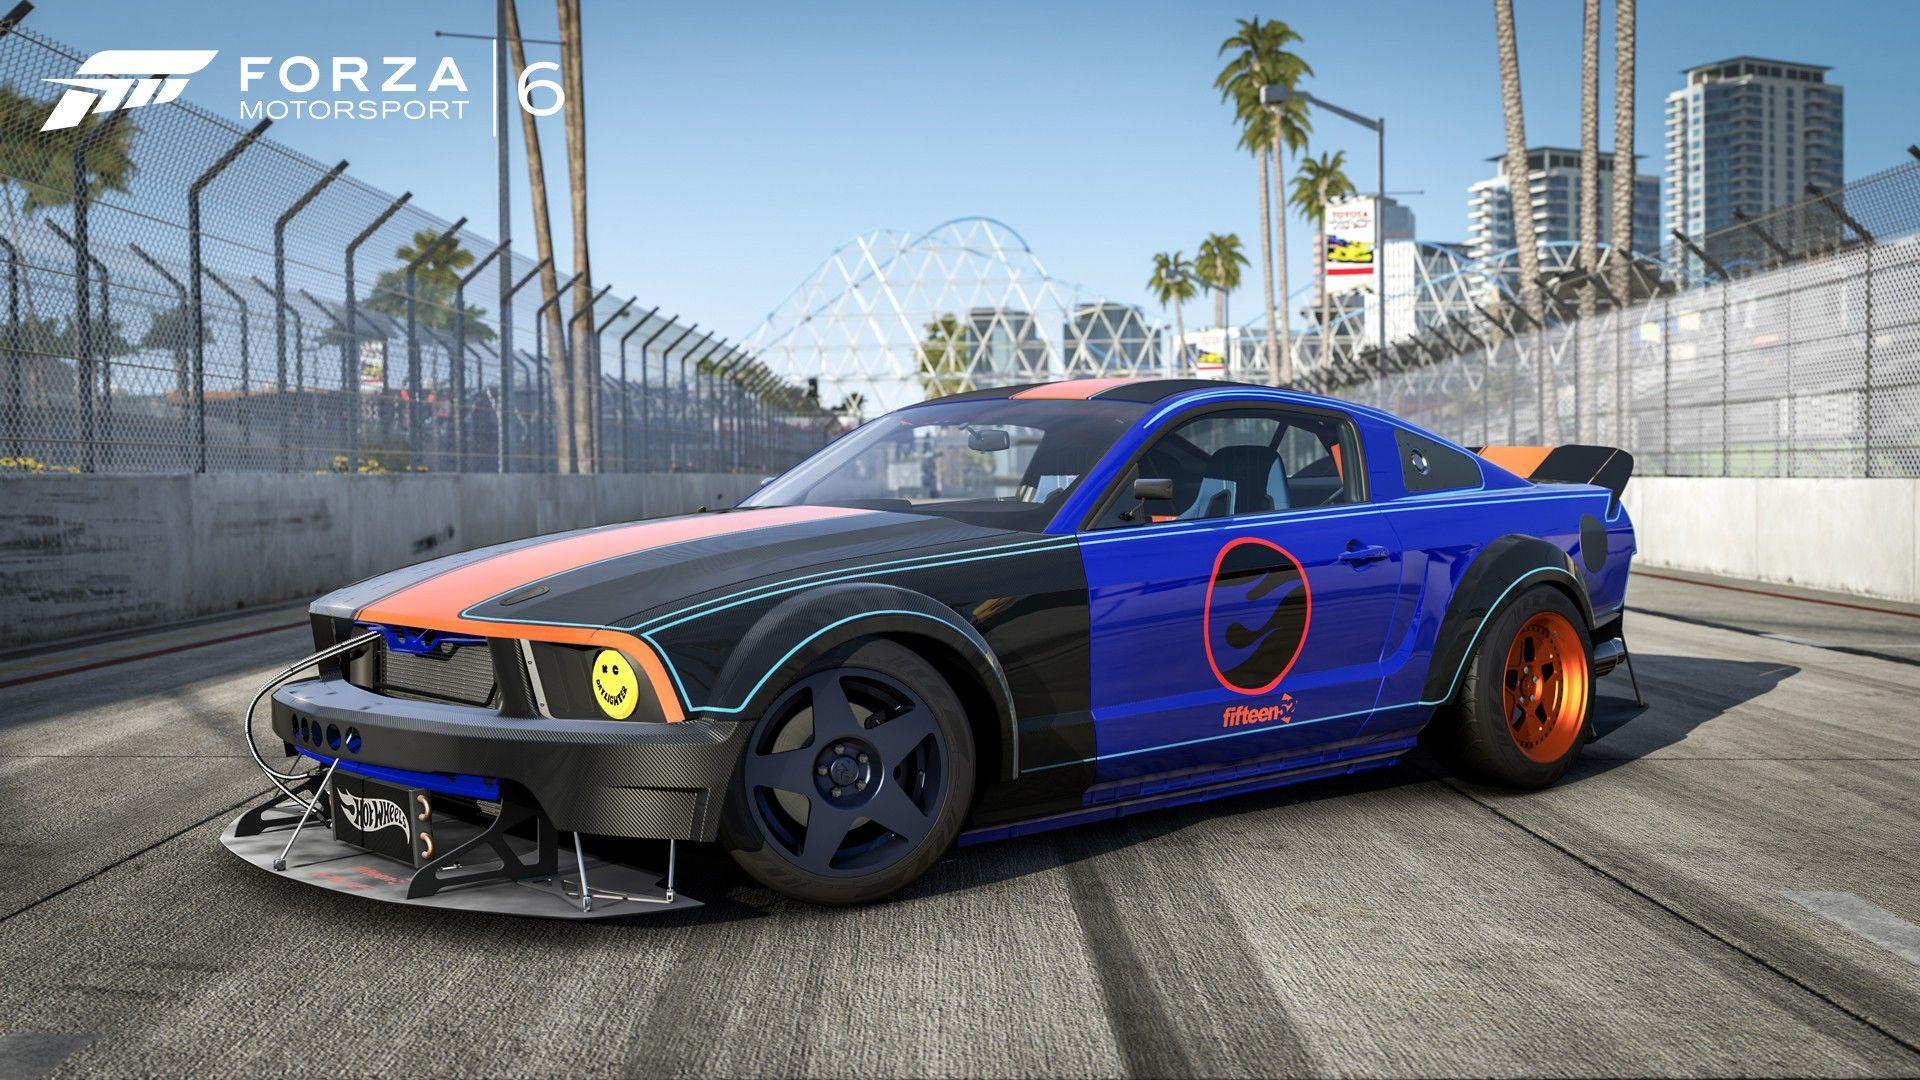 Download the Forza Hot Wheels Mustang Wallpaper, Forza Hot Wheels